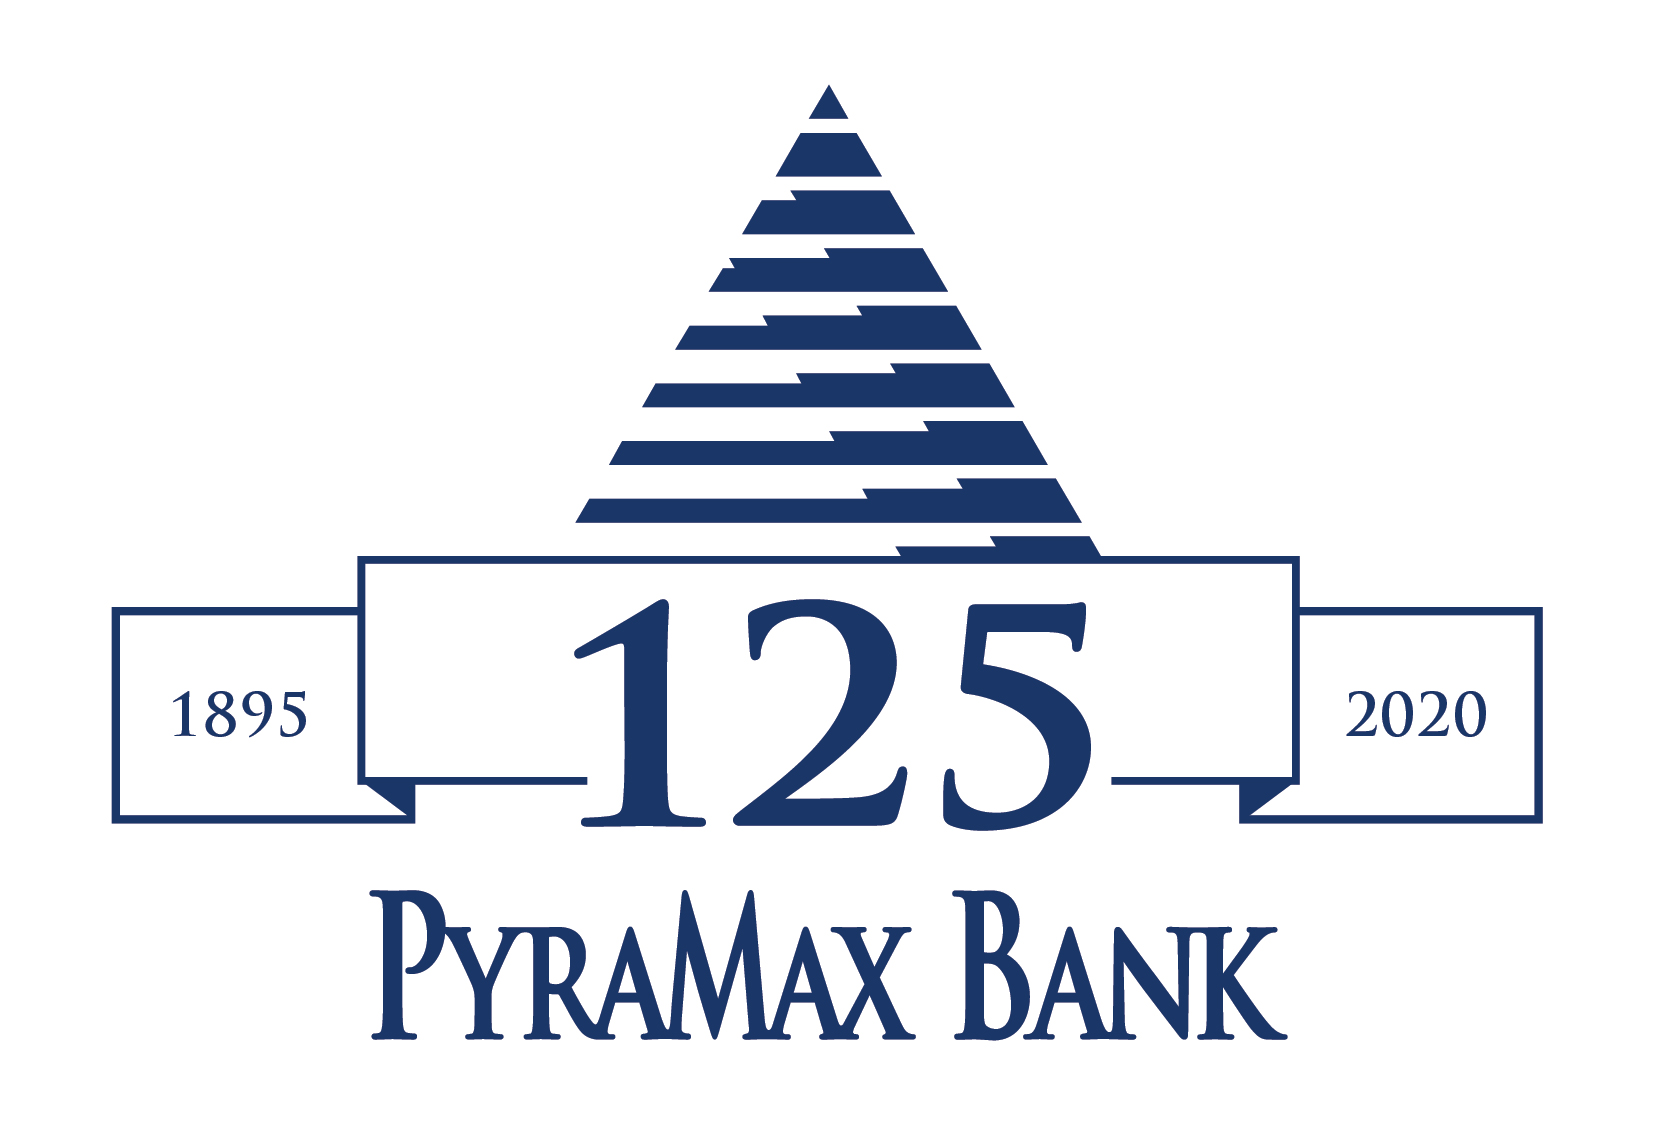 PyraMax Bank Company Logo